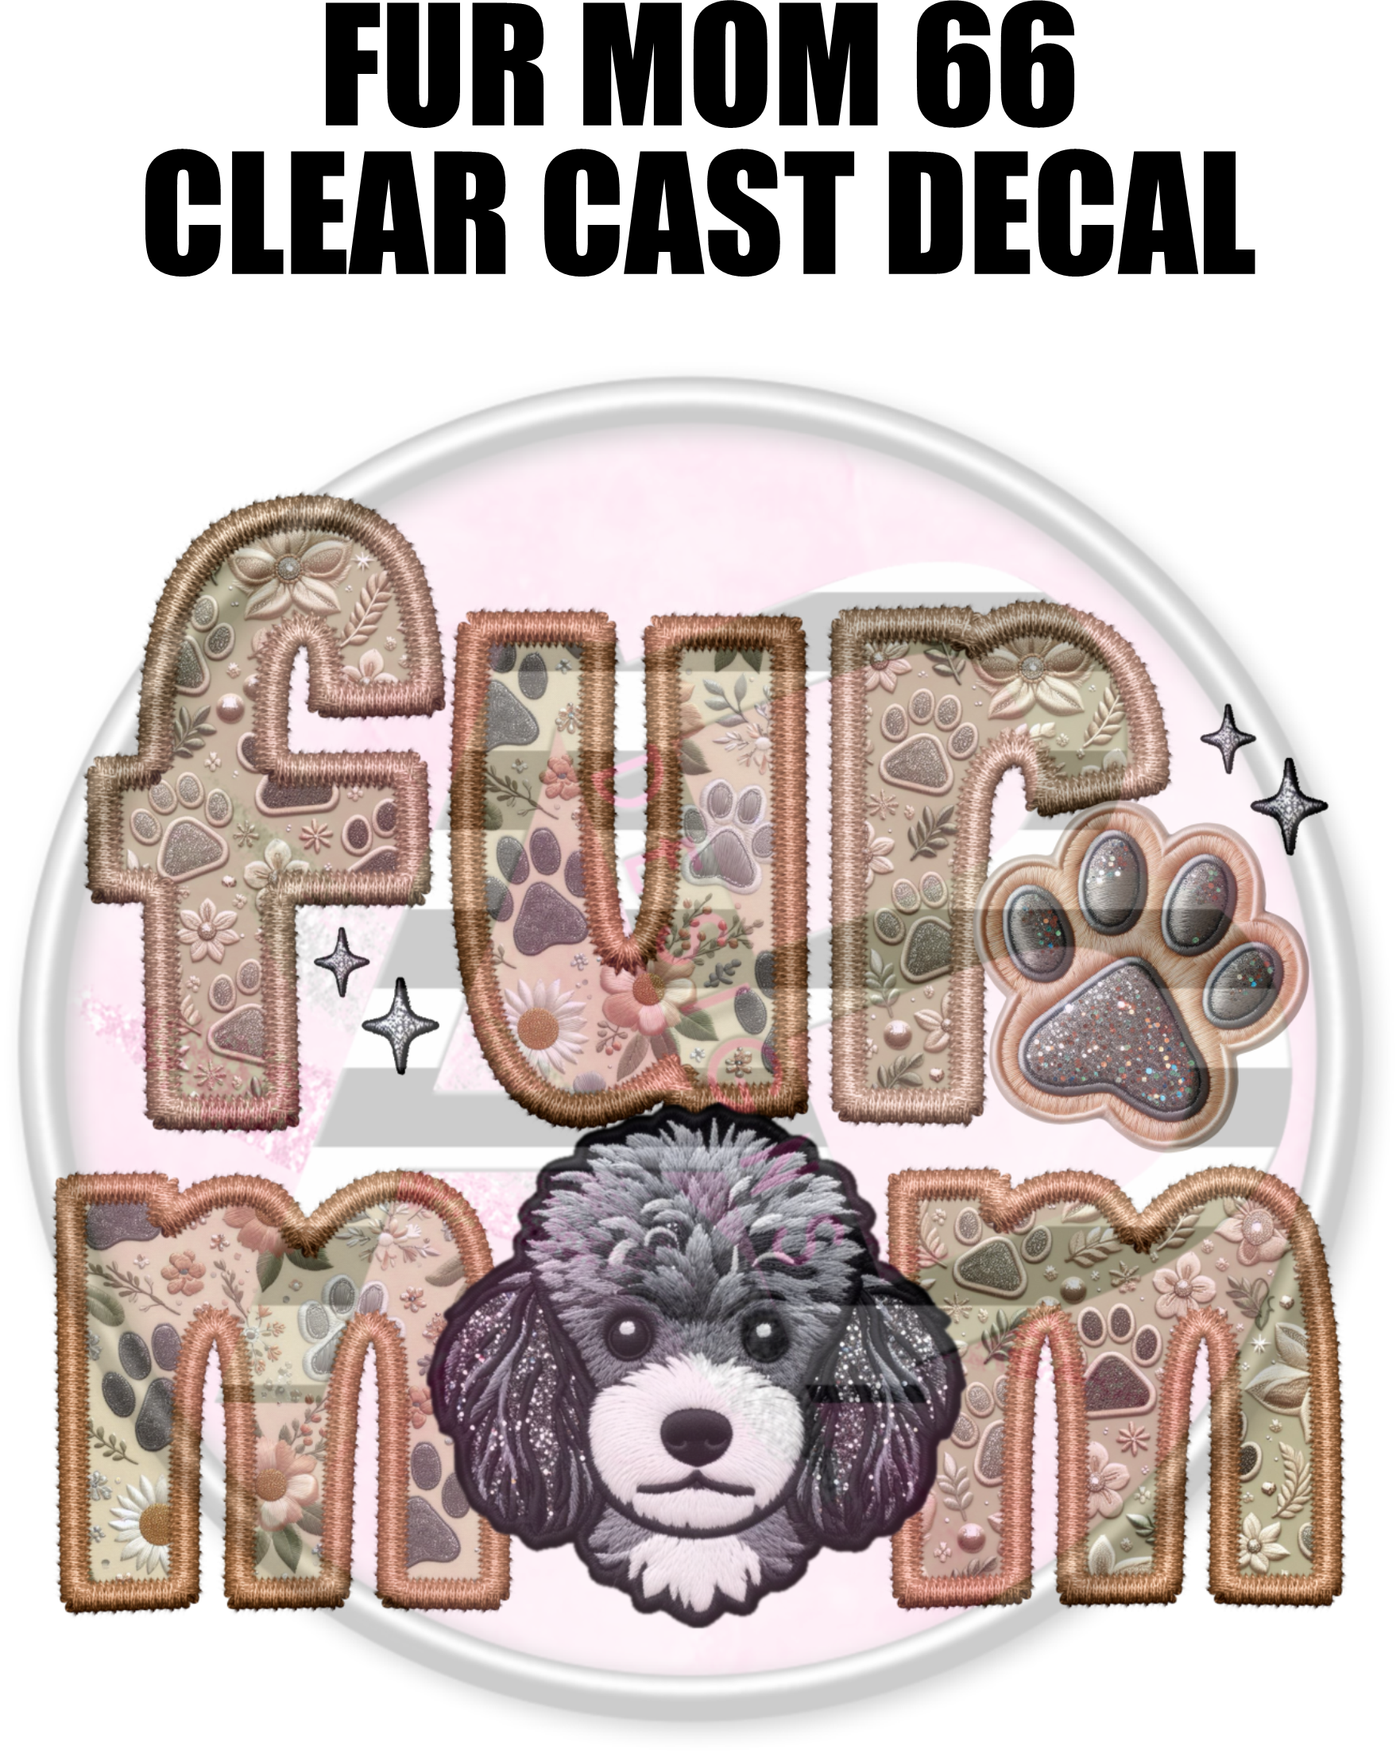 Fur Mom 66 - Clear Cast Decal